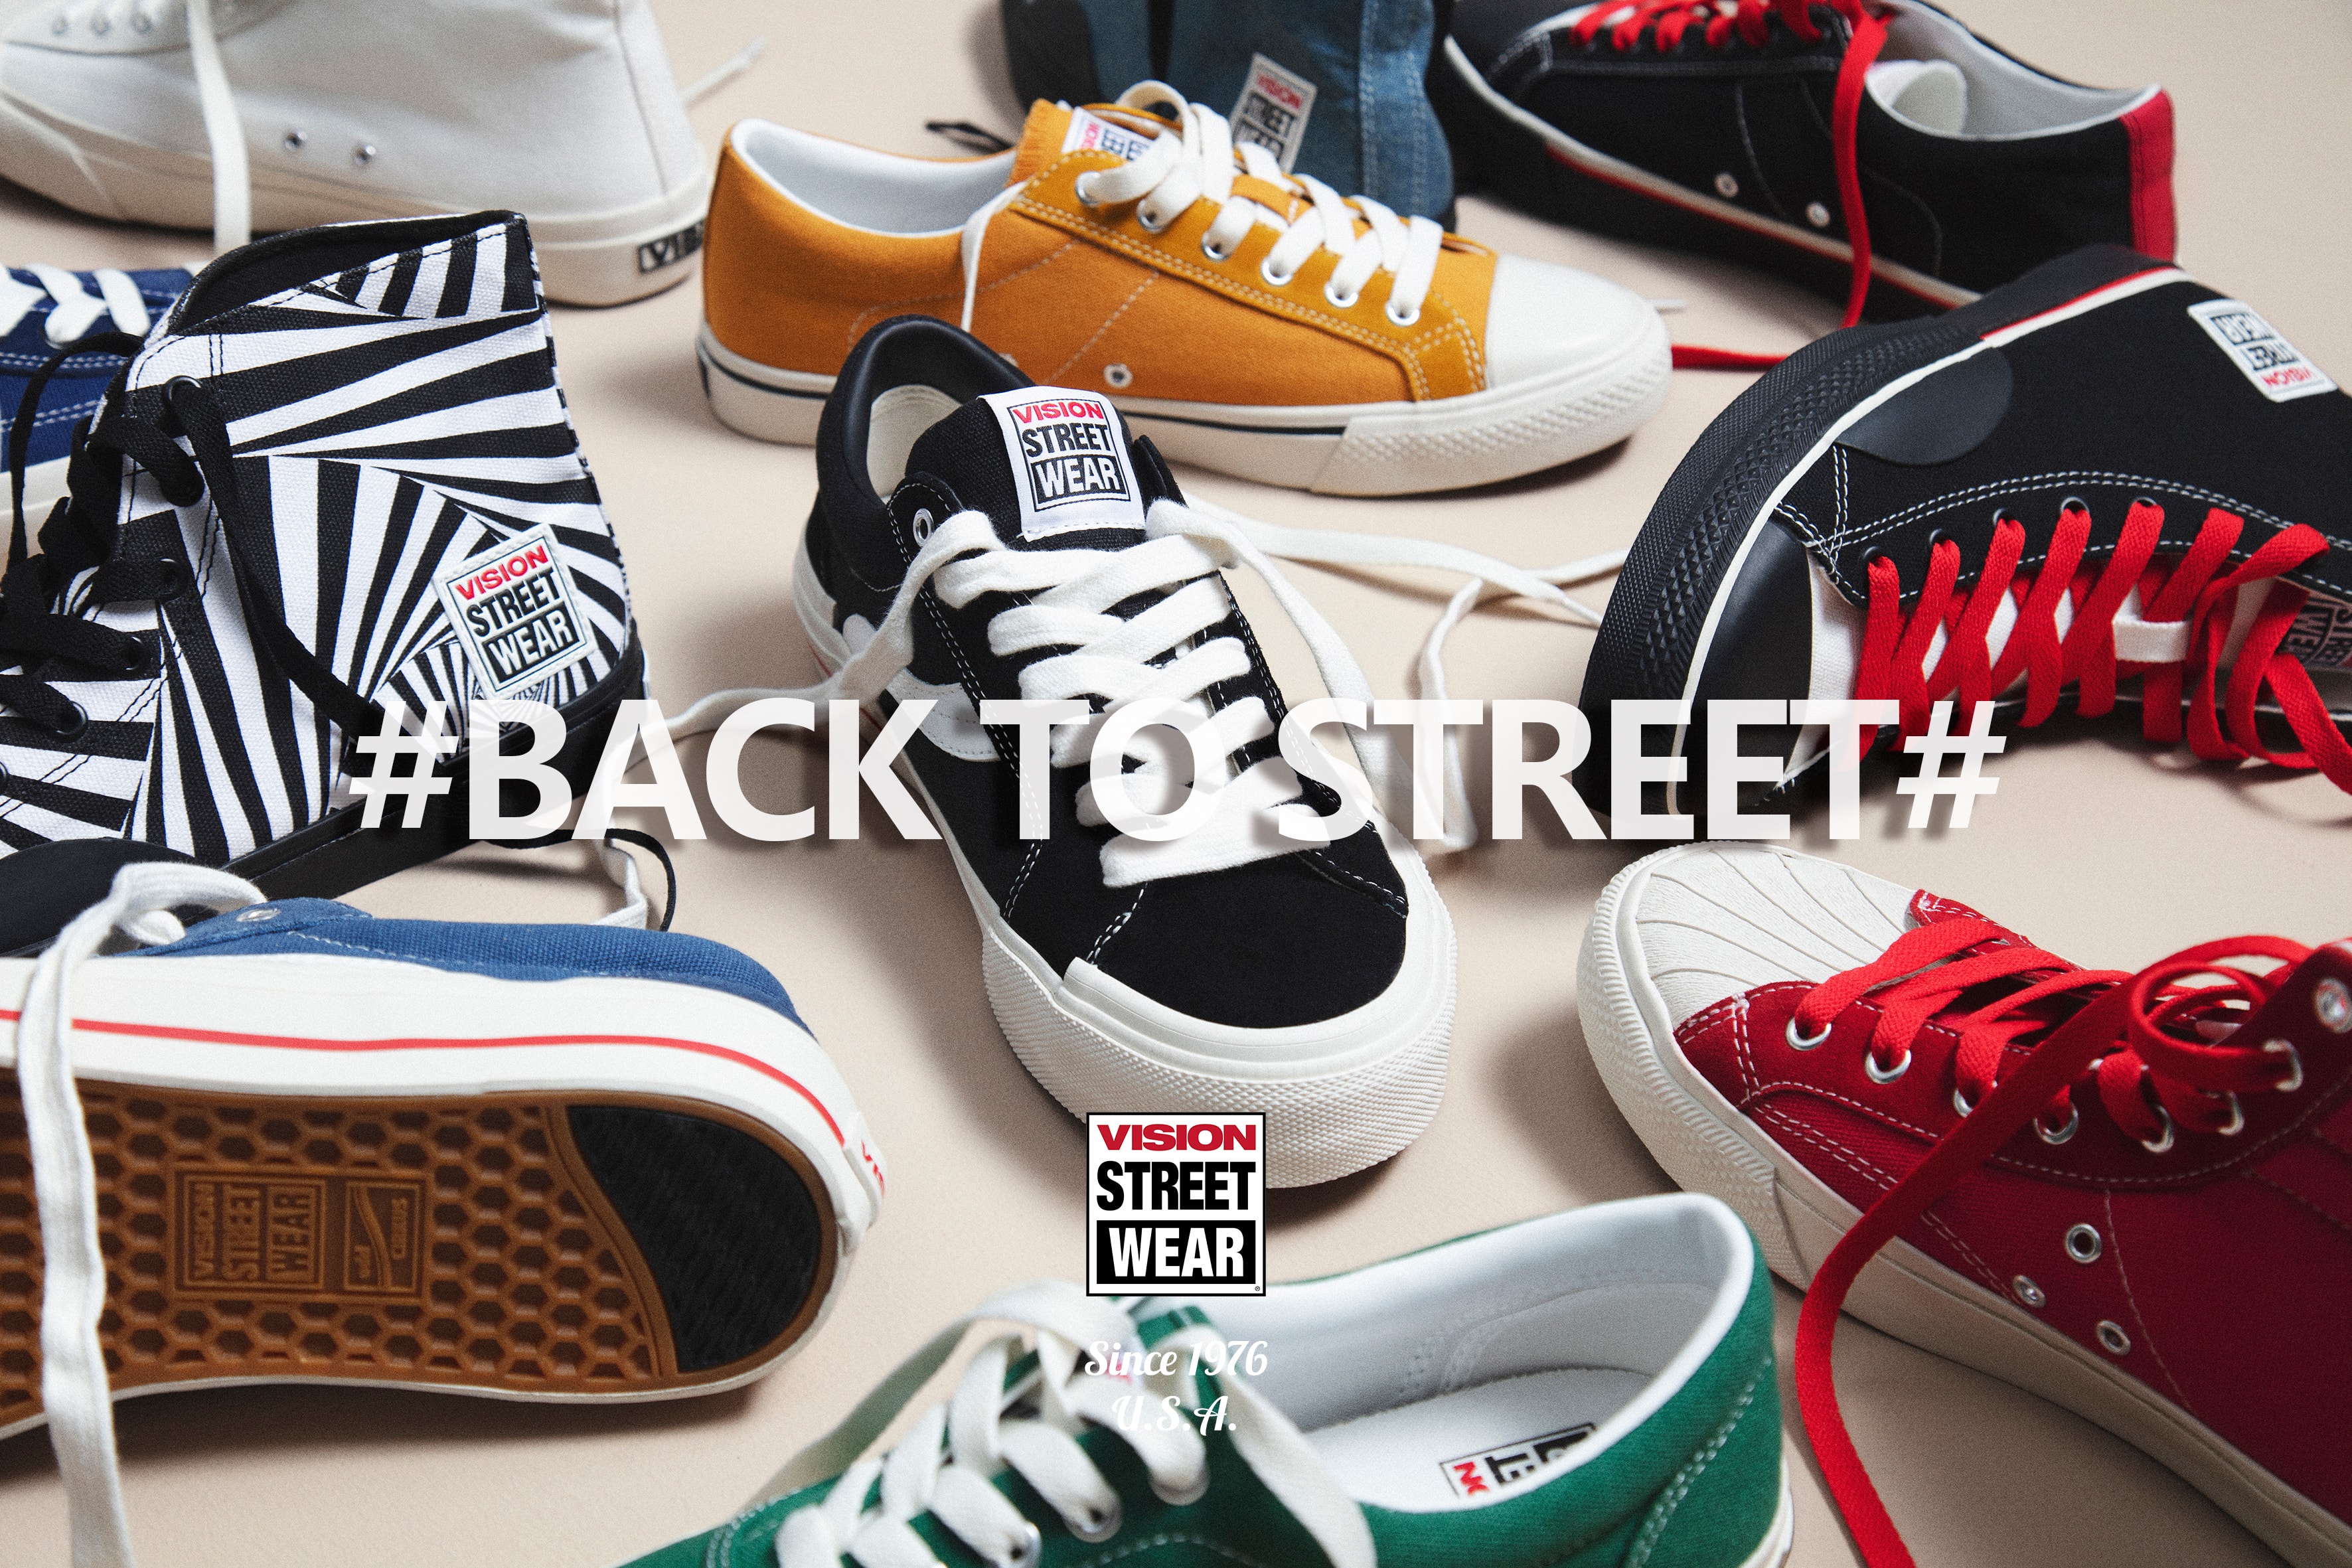 Vision Street Wear 经典复刻系列鞋款即将发售